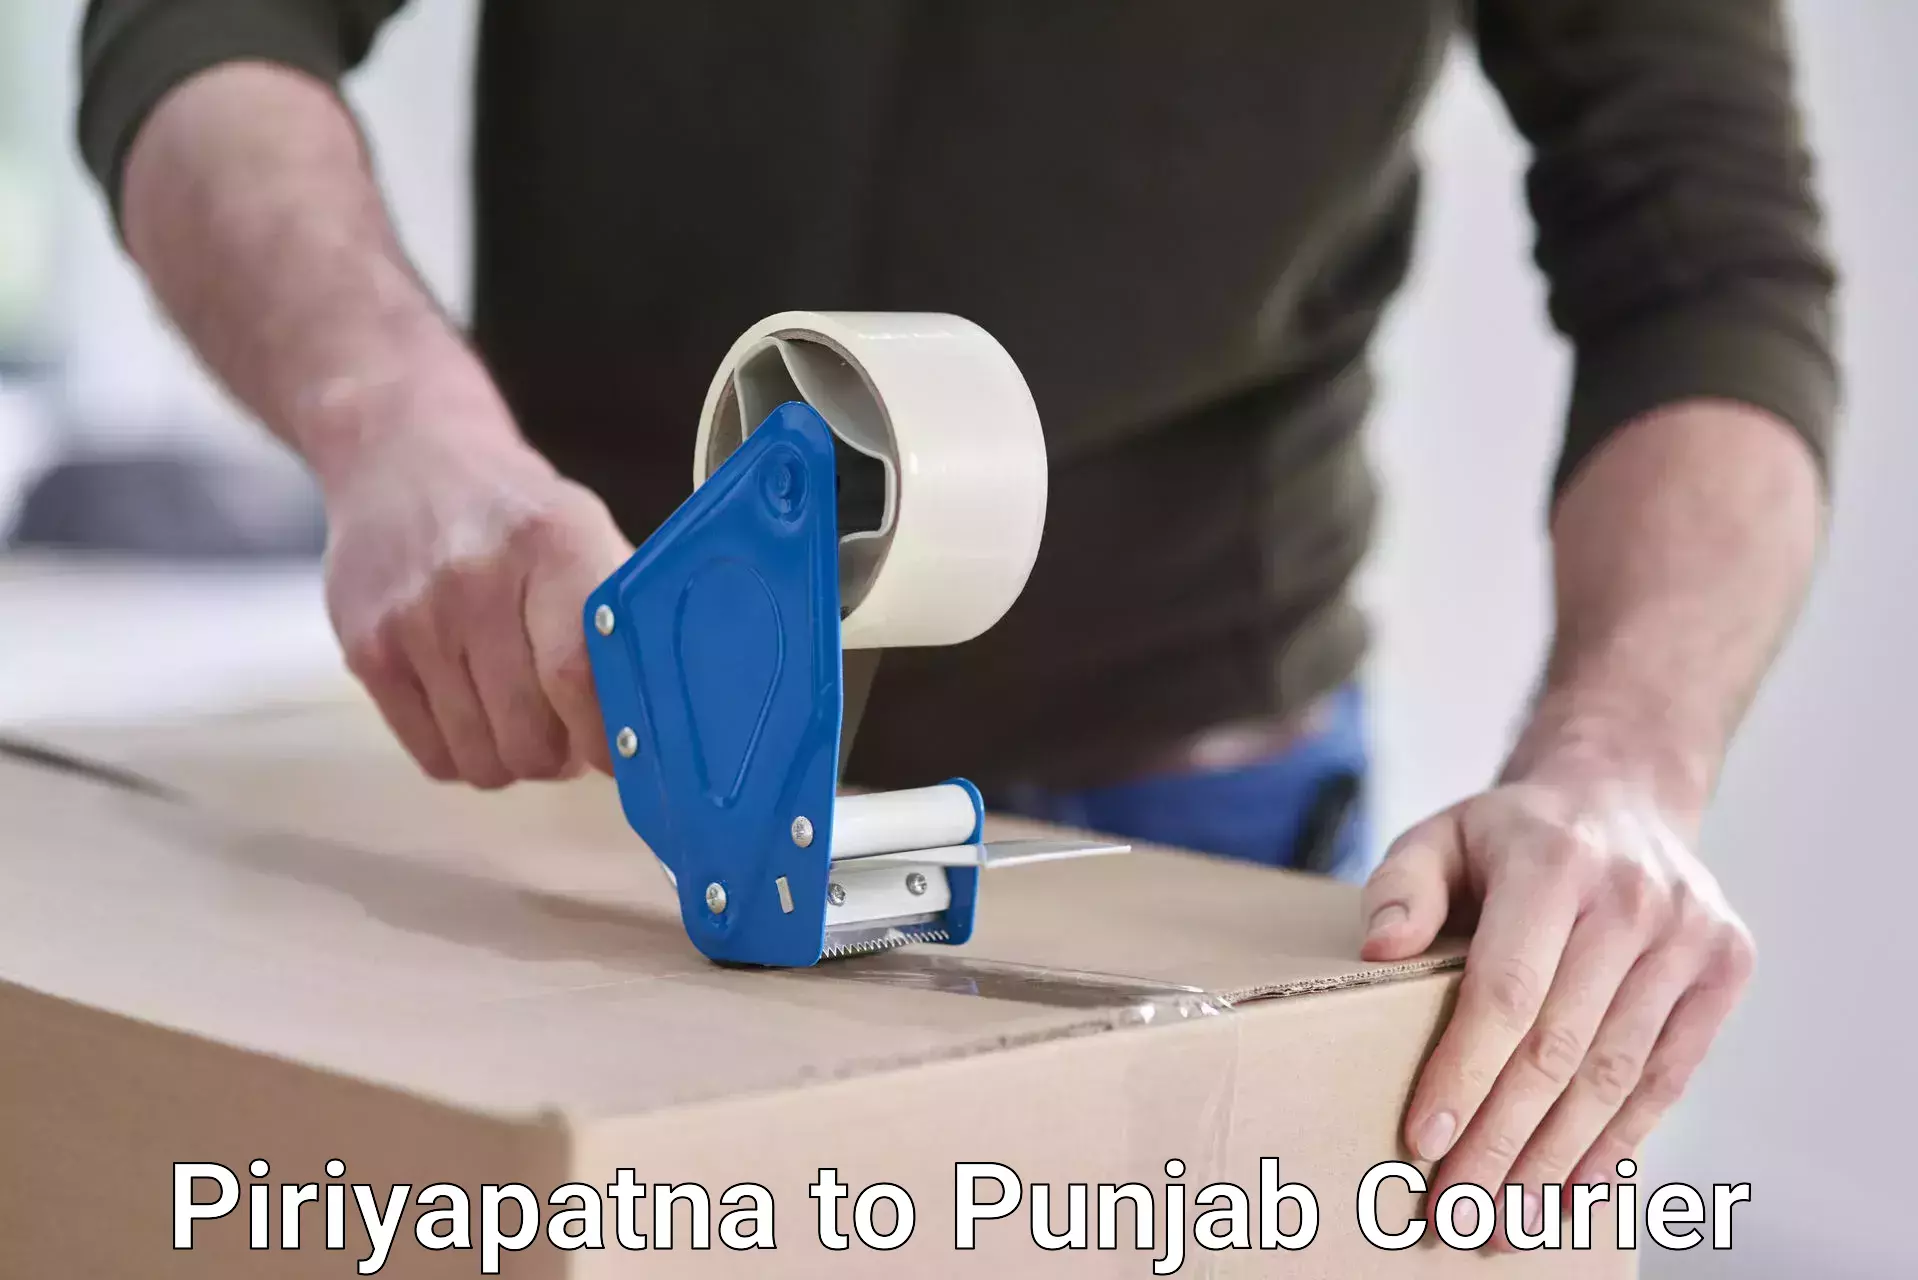 Courier service partnerships Piriyapatna to Bathinda